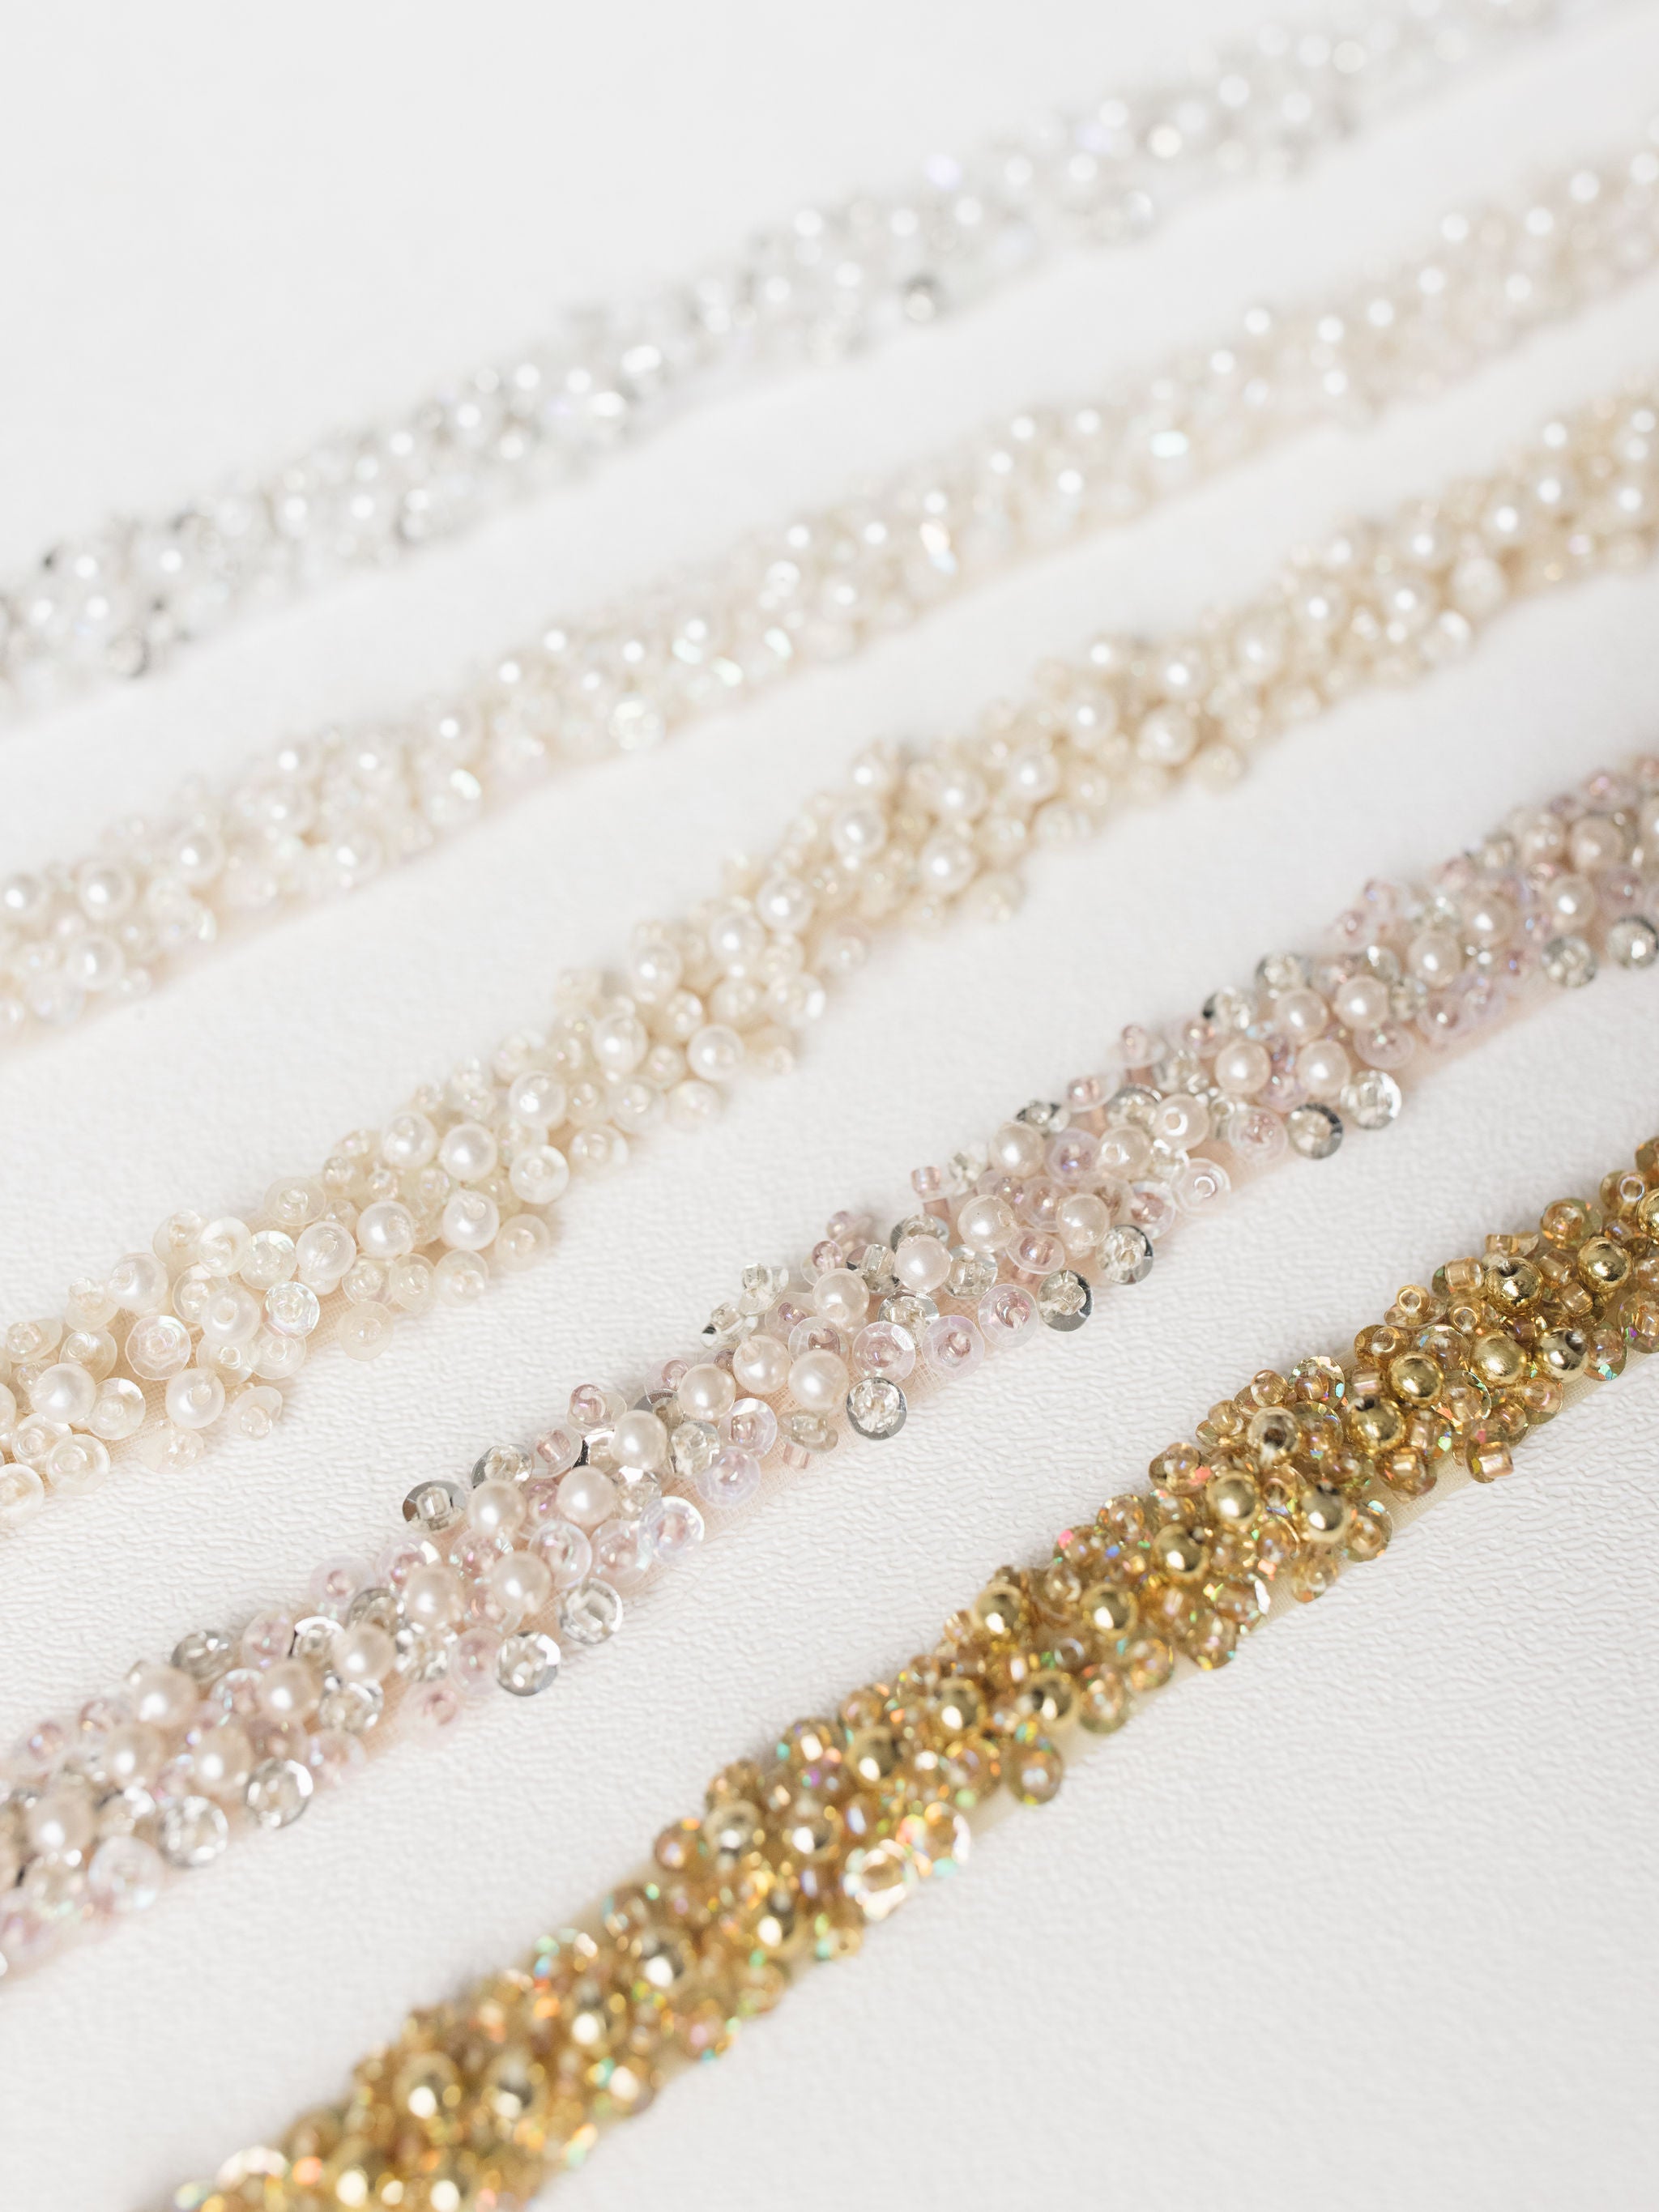 ultimate luxury wedding garter set with sparkles, pearls & beads handmade by expert garter designer The Garter Girl